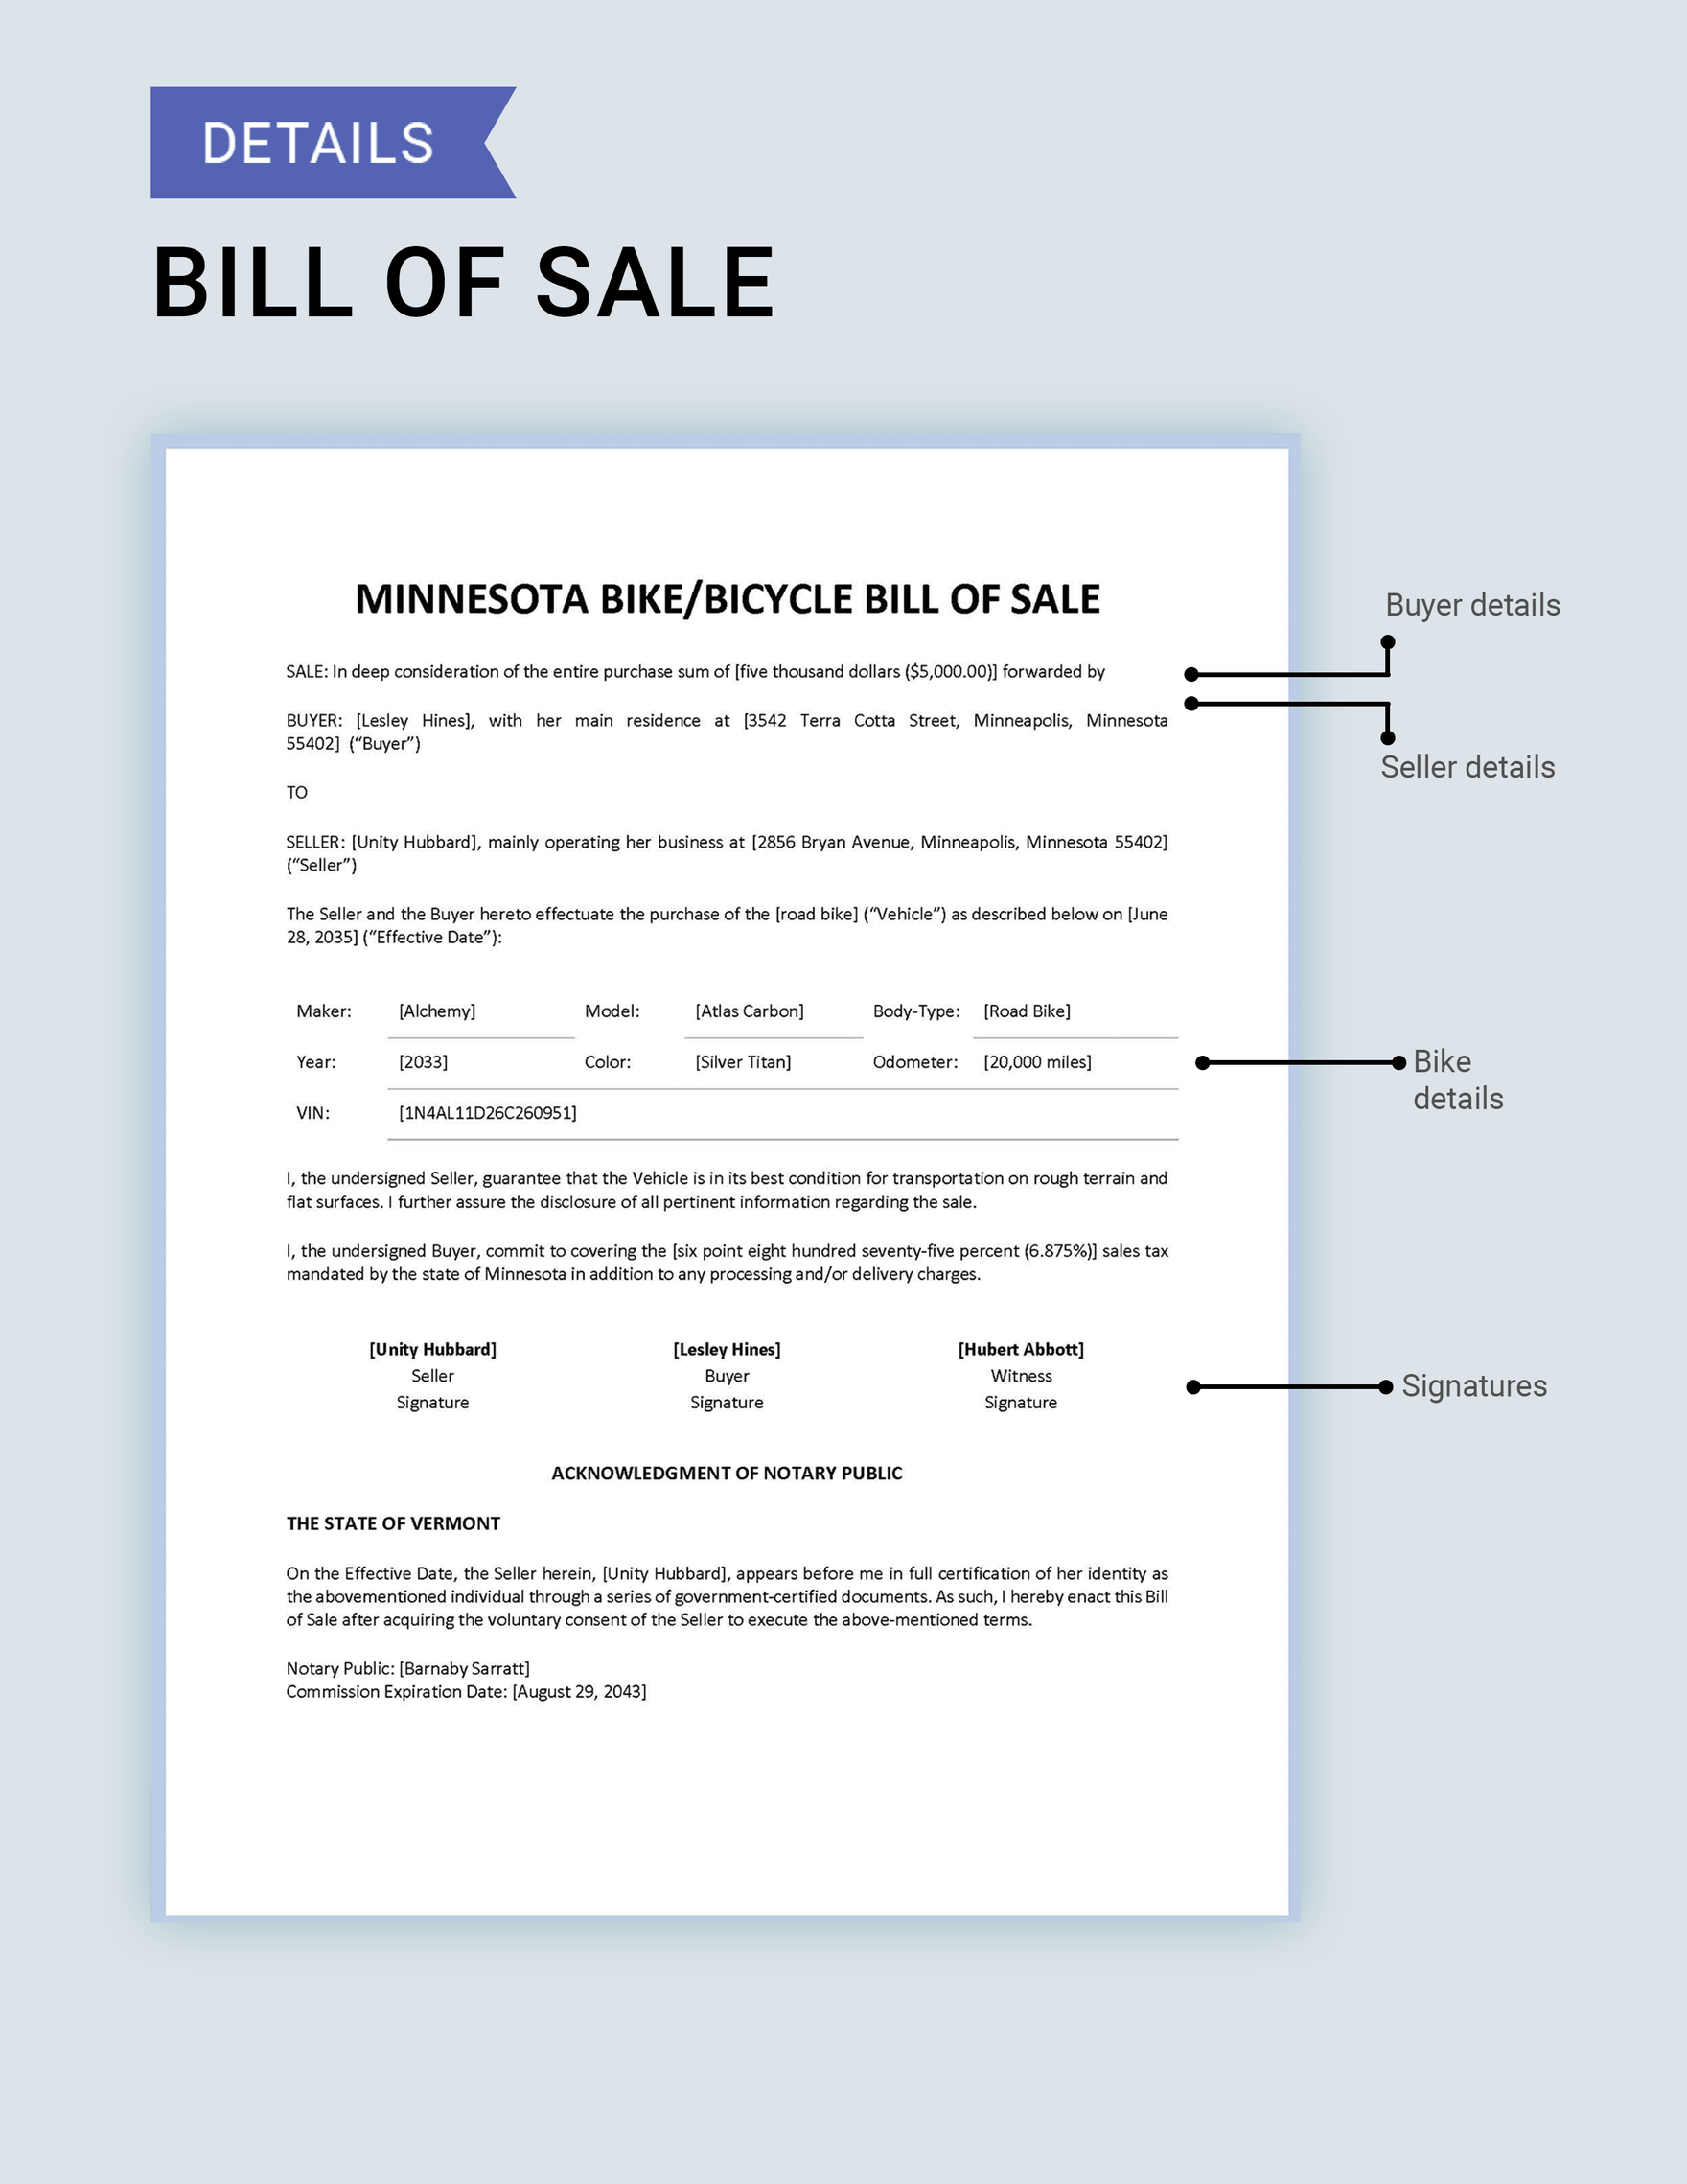 Minnesota Bike/ Bicycle Bill of Sale Form Template